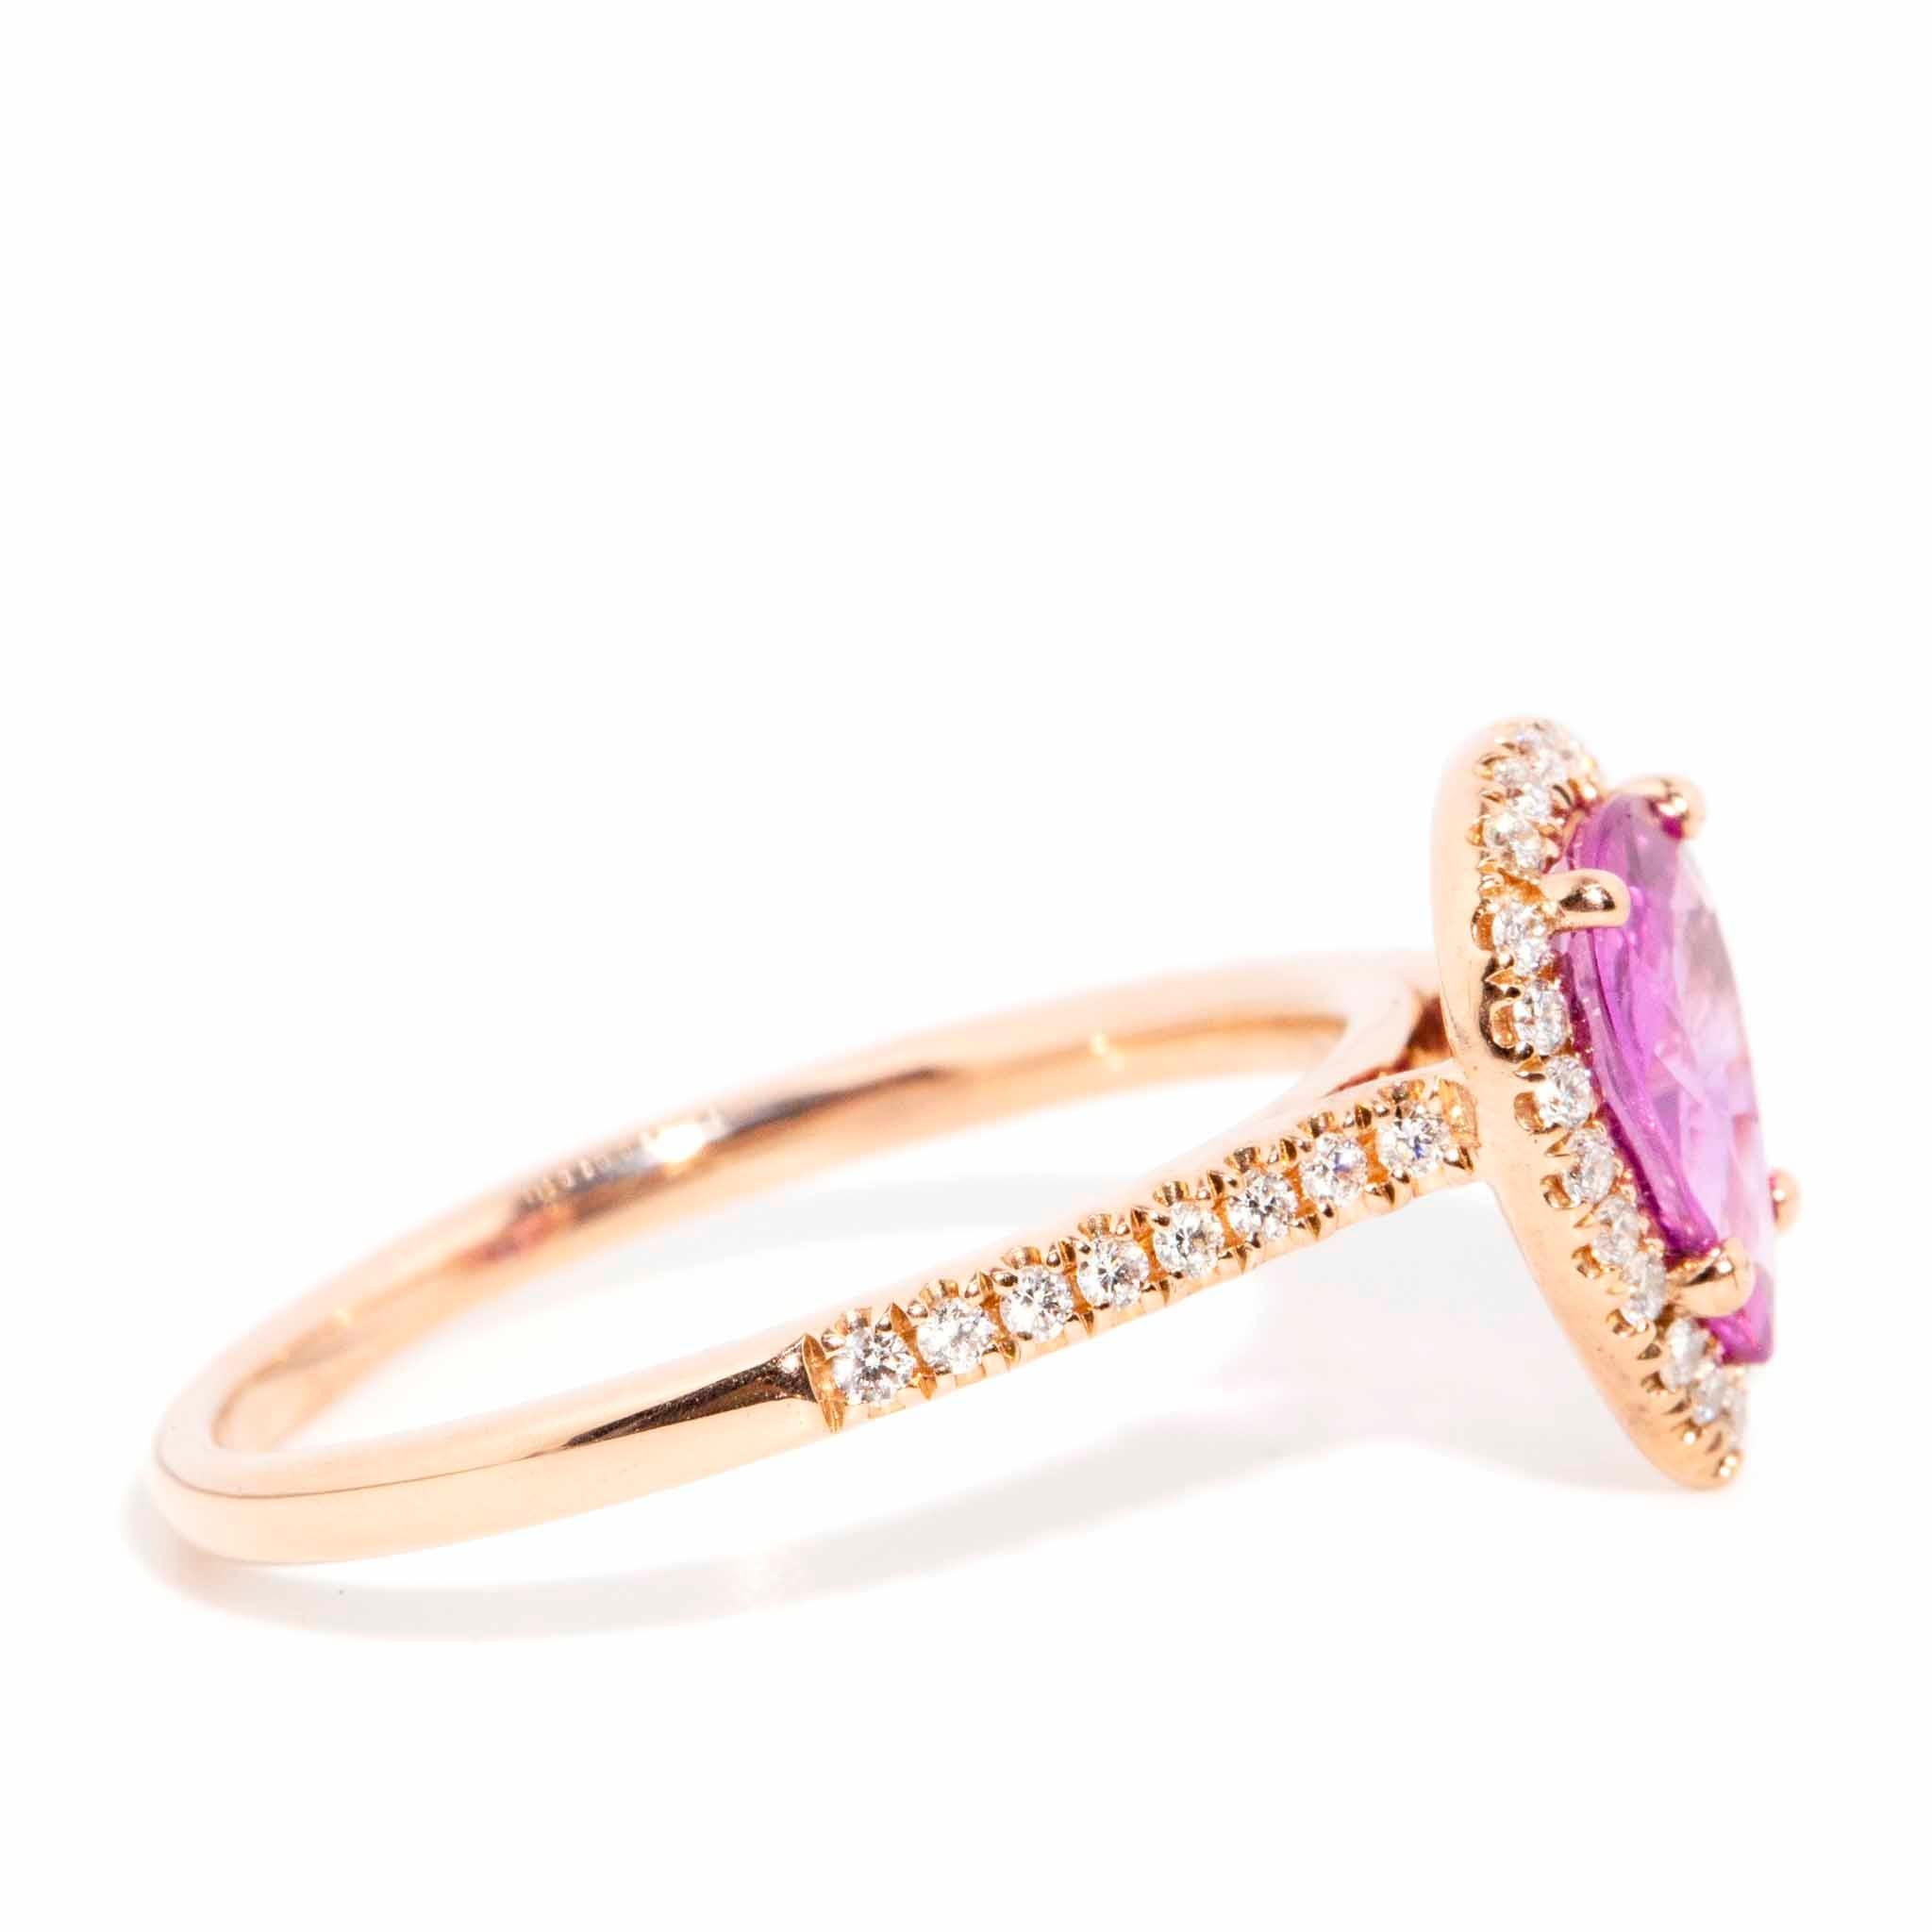 Wanda 1.21 Carat Purple Pink Pear Cut Sapphire & Diamond Ring 14 Carat Rose Gold For Sale 1